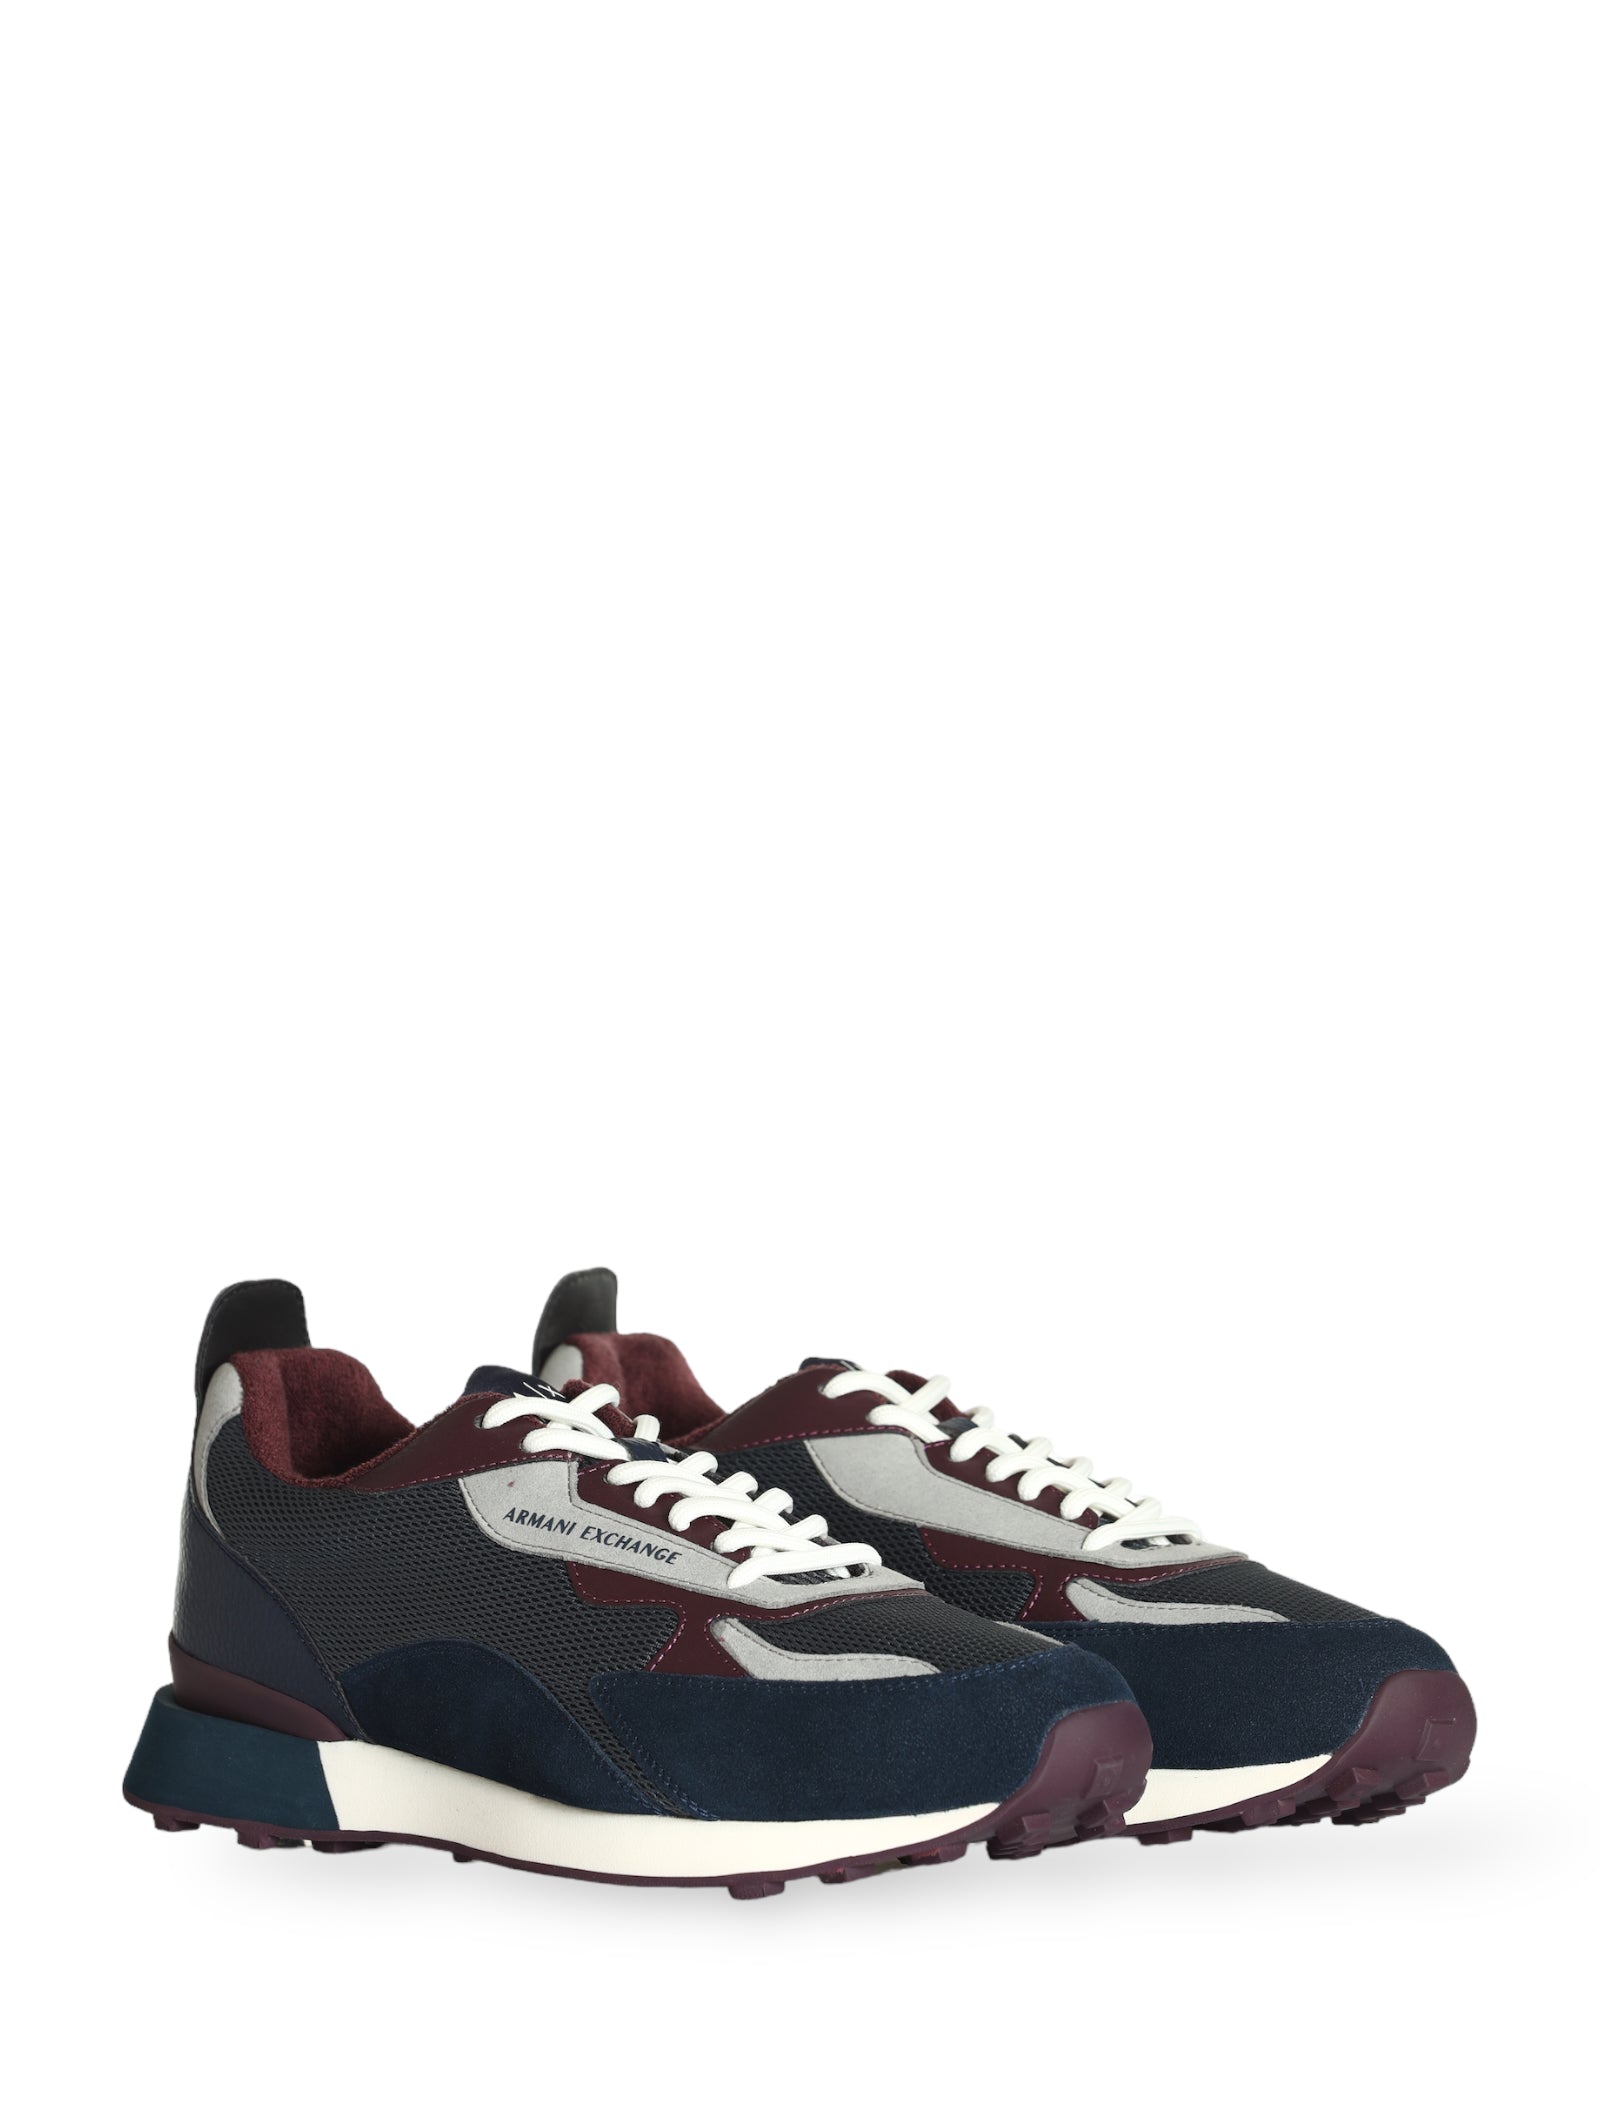 Sneakers Xux192 Navy+slate+bordeaux